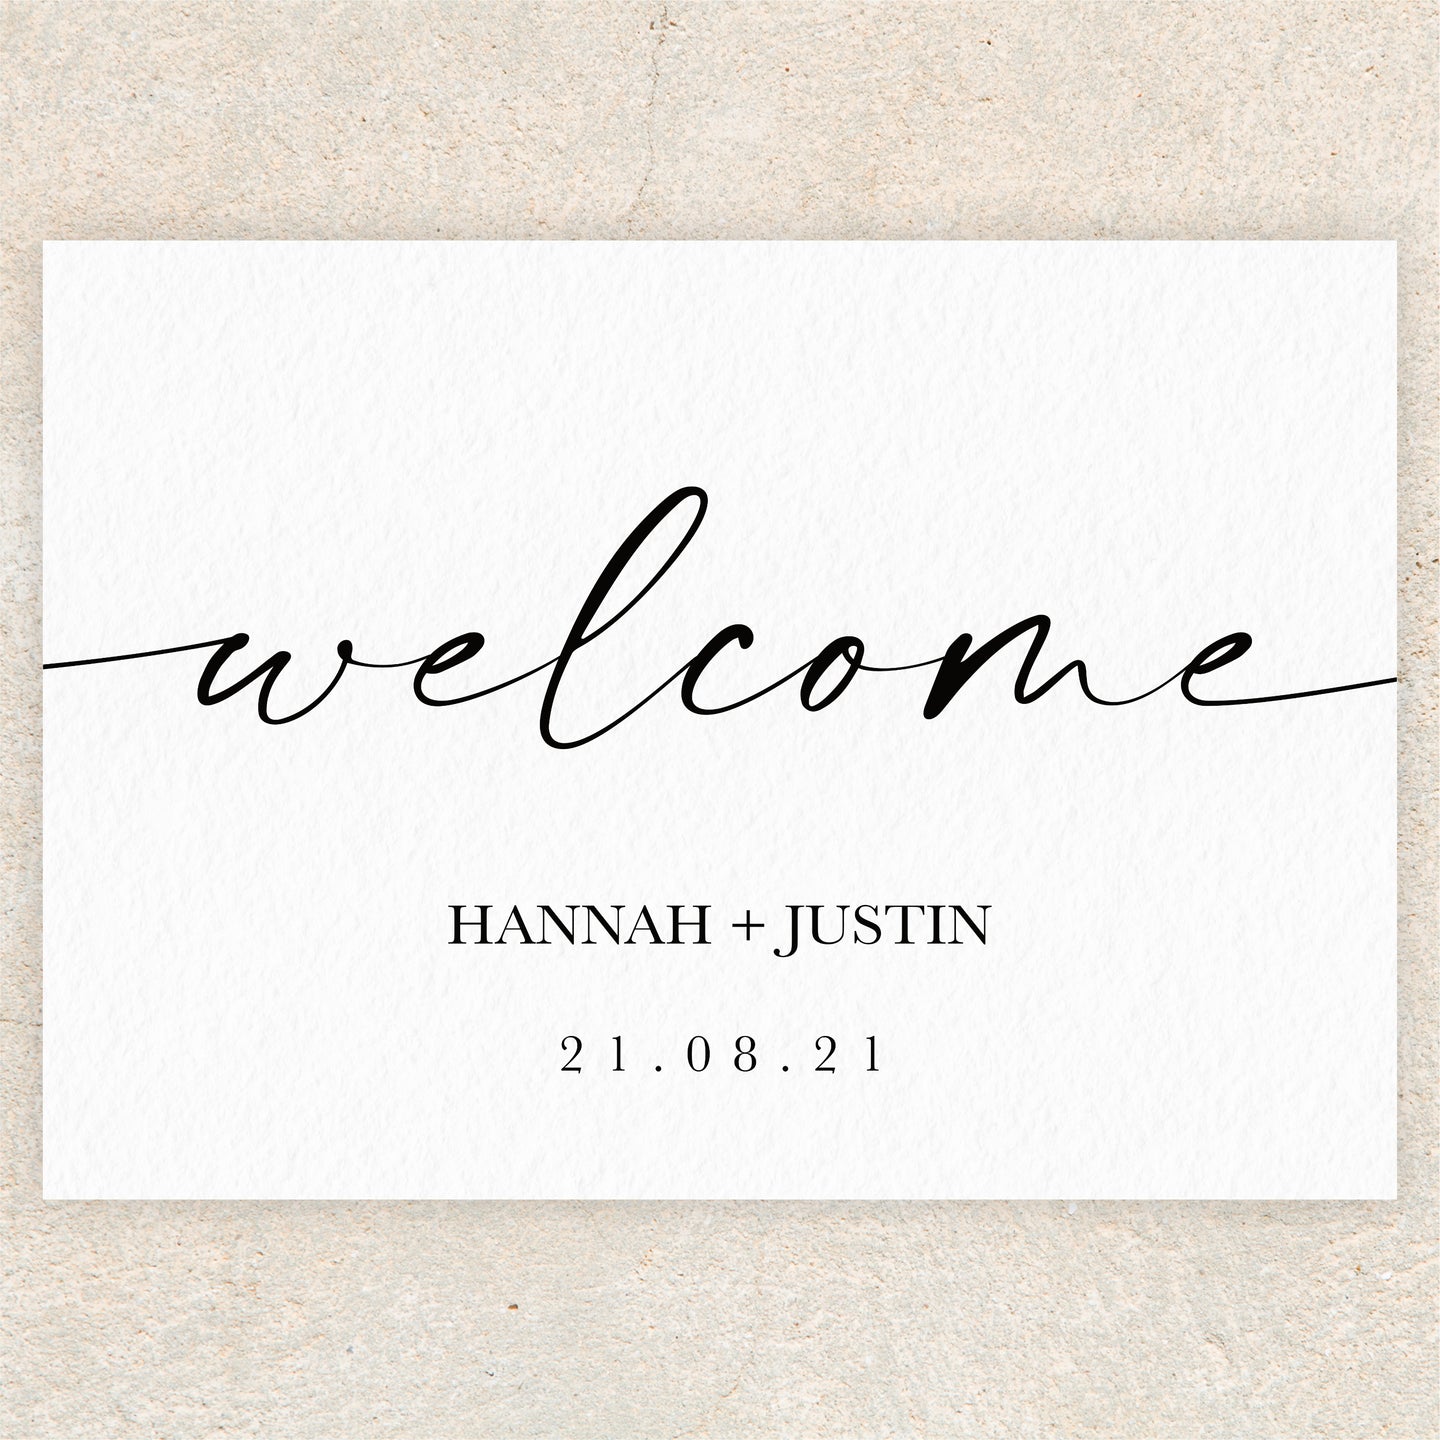 Hannah Welcome Sign - Landscape